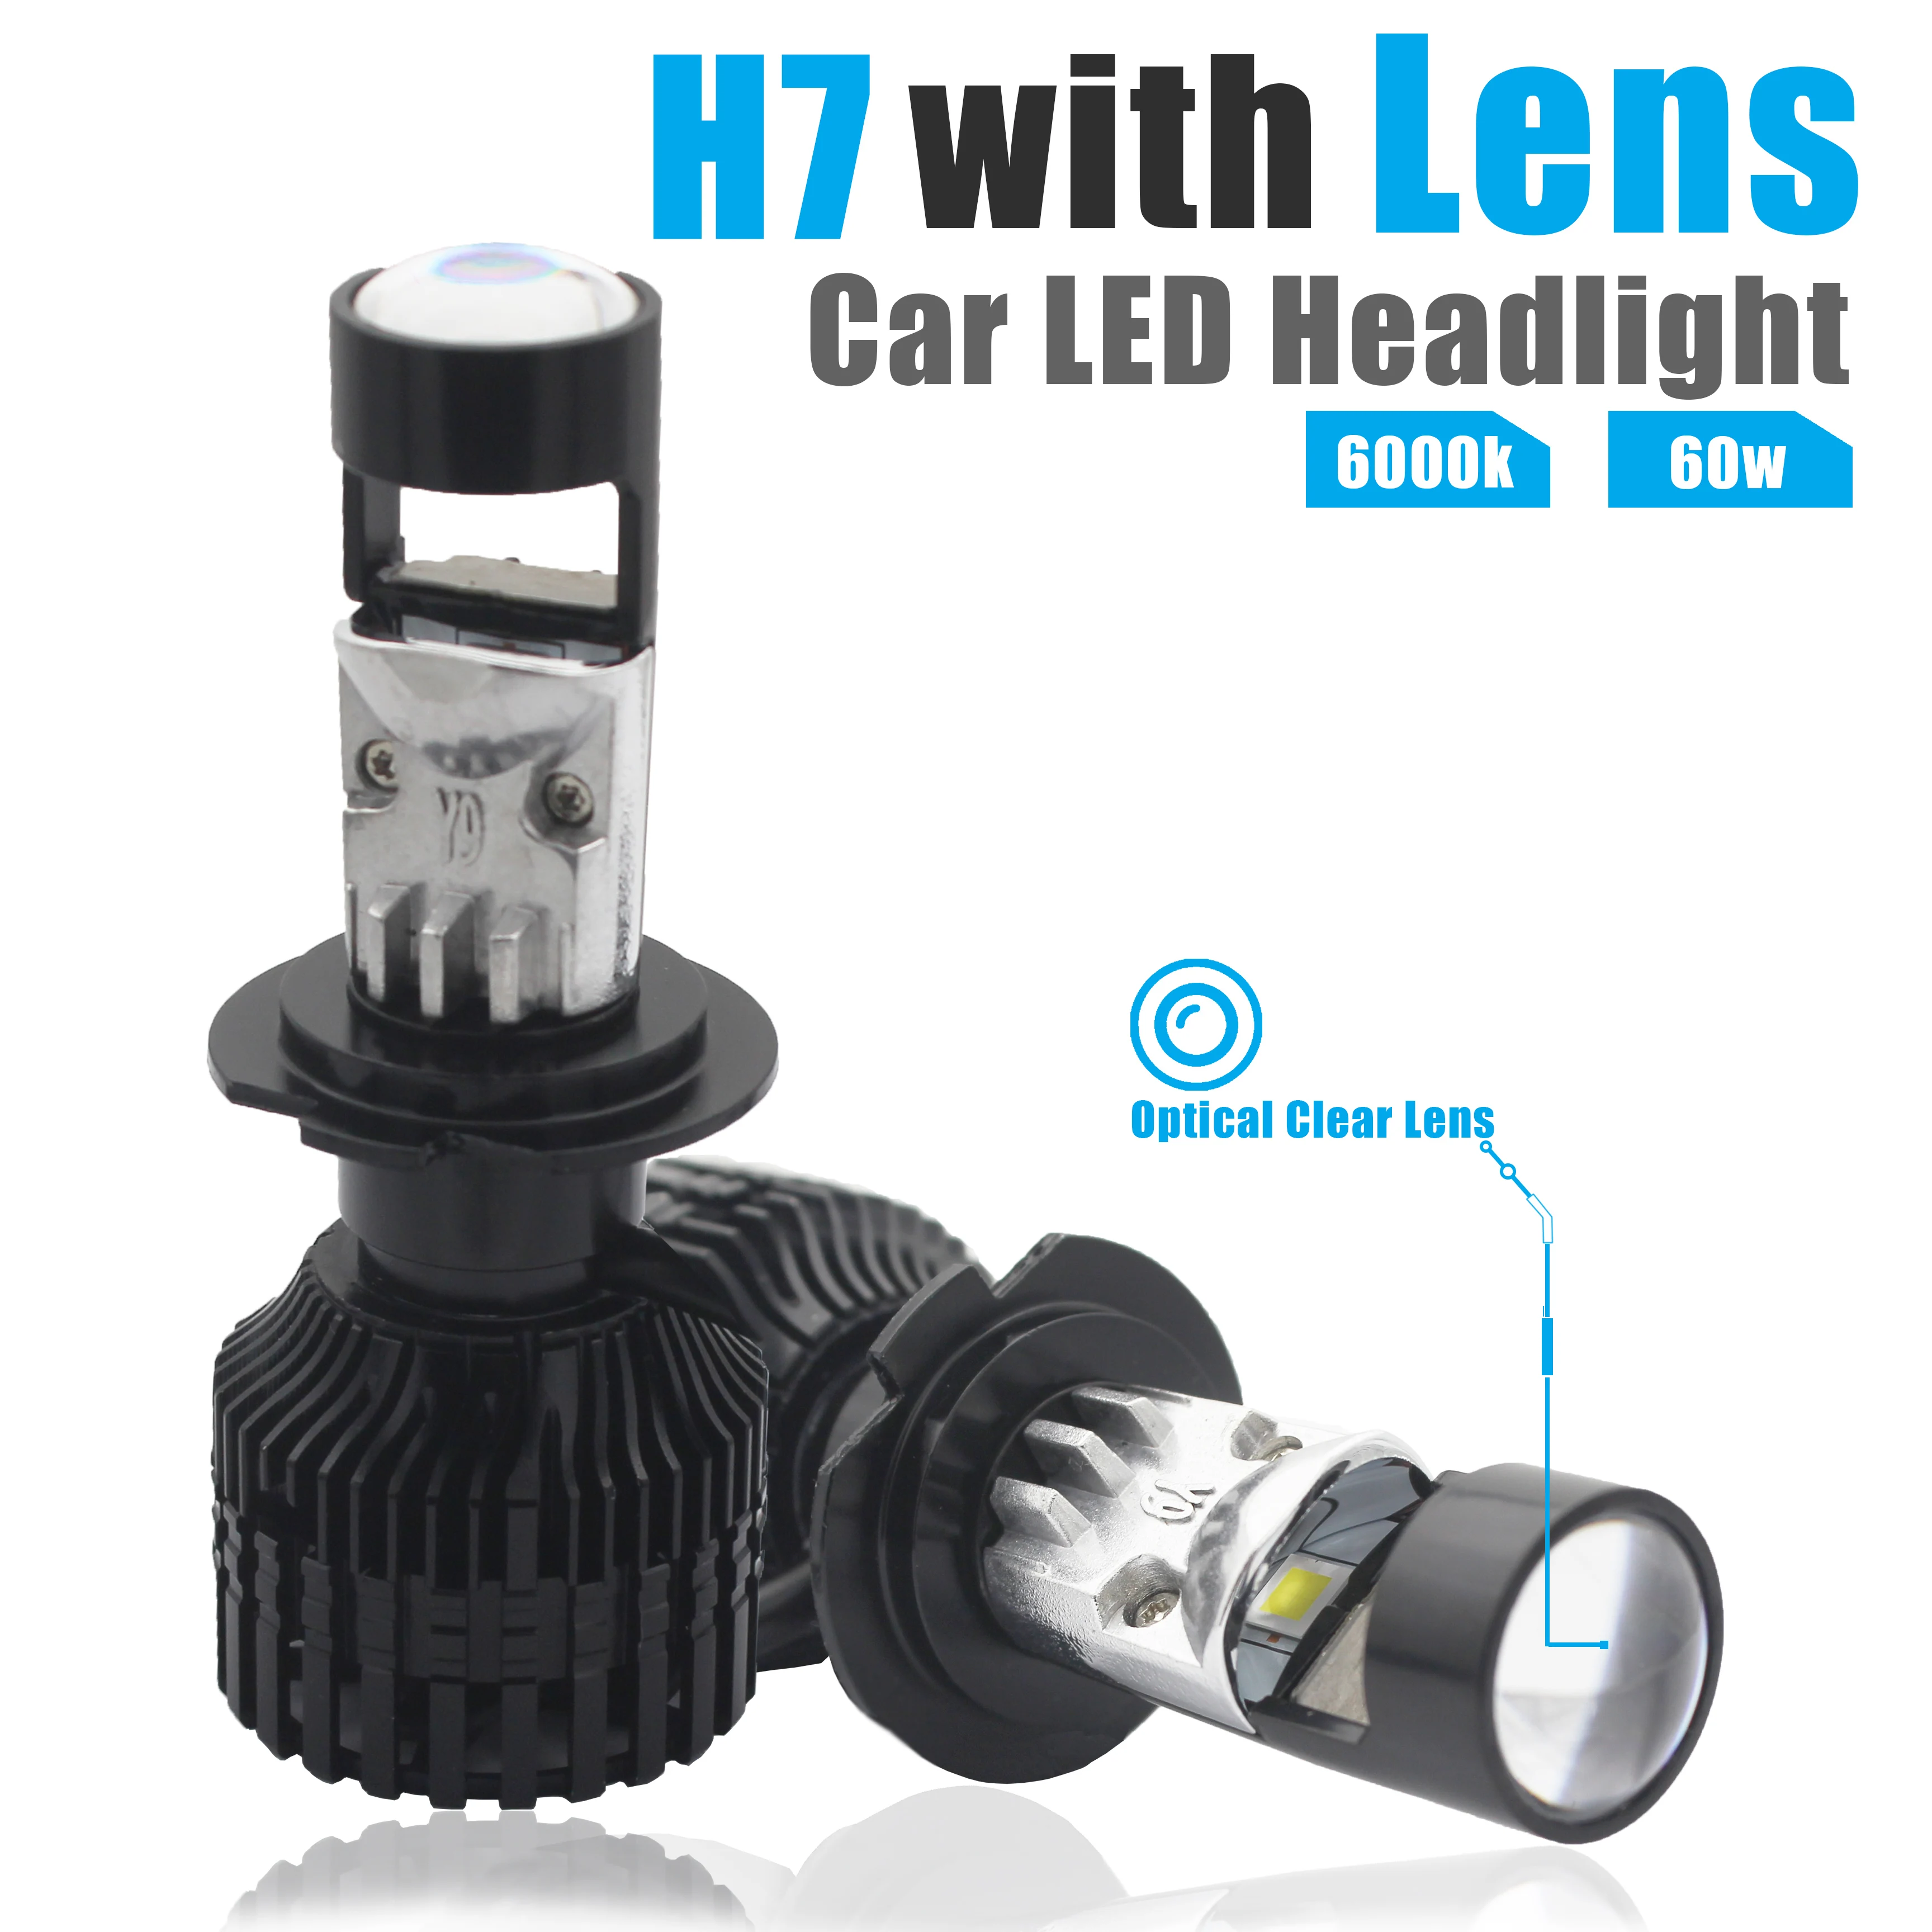 Мини линза h7 купить. Led Headlight hb4 6000k. Лампа hb3 линза led. Лампы led мини линзы hb4. Hb4 светодиодная лампа с линзой.